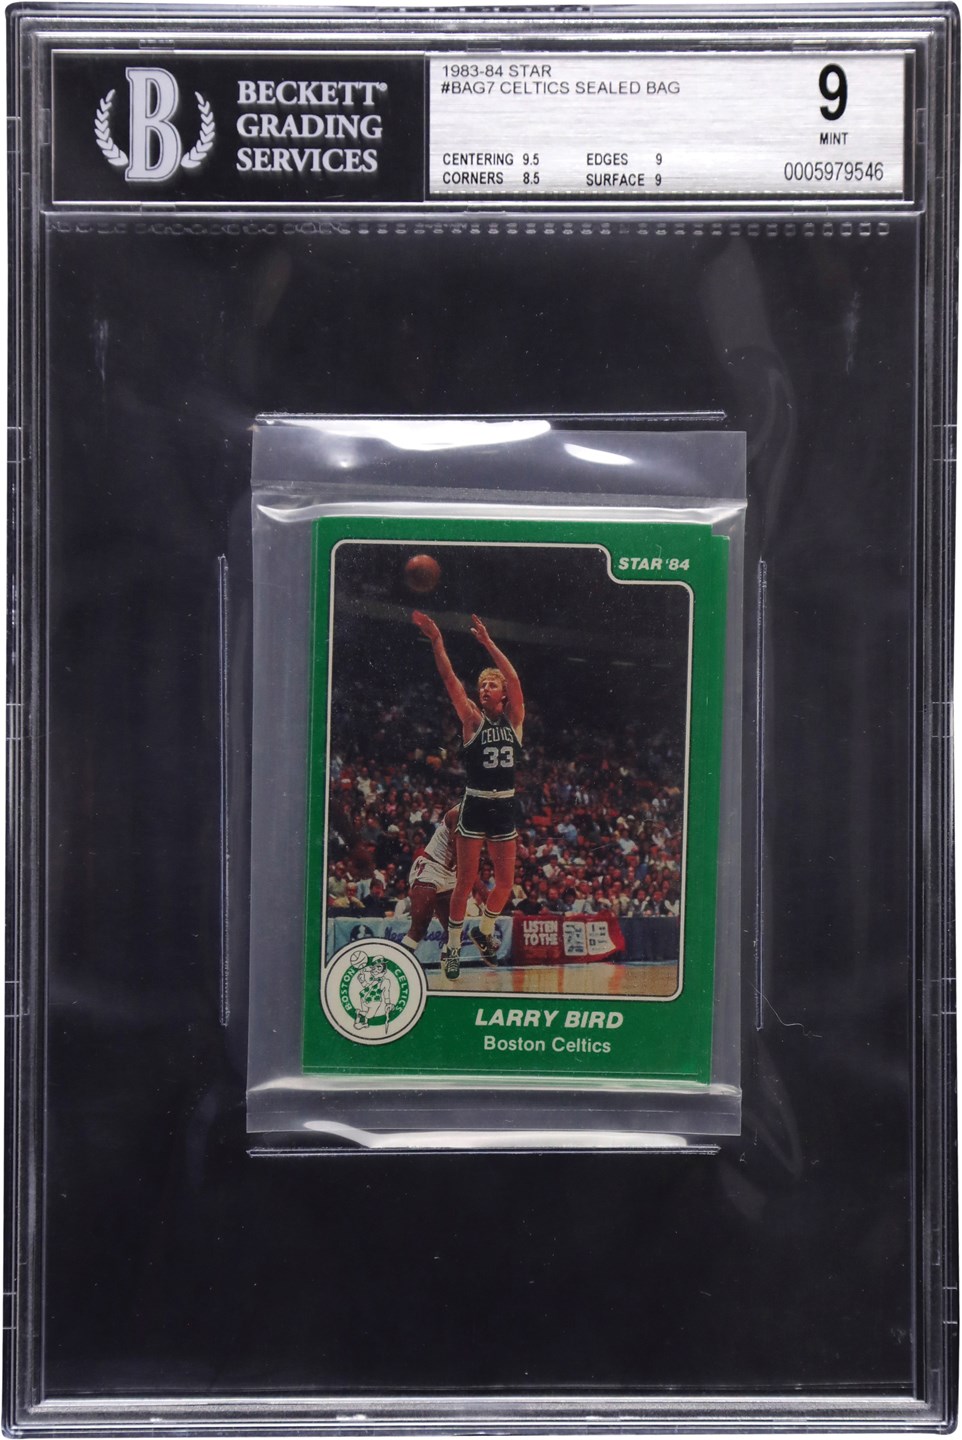 Basketball Cards - Rare 1983-84 Star #BAG7 Boston Celtics Sealed Bag BGS MINT 9